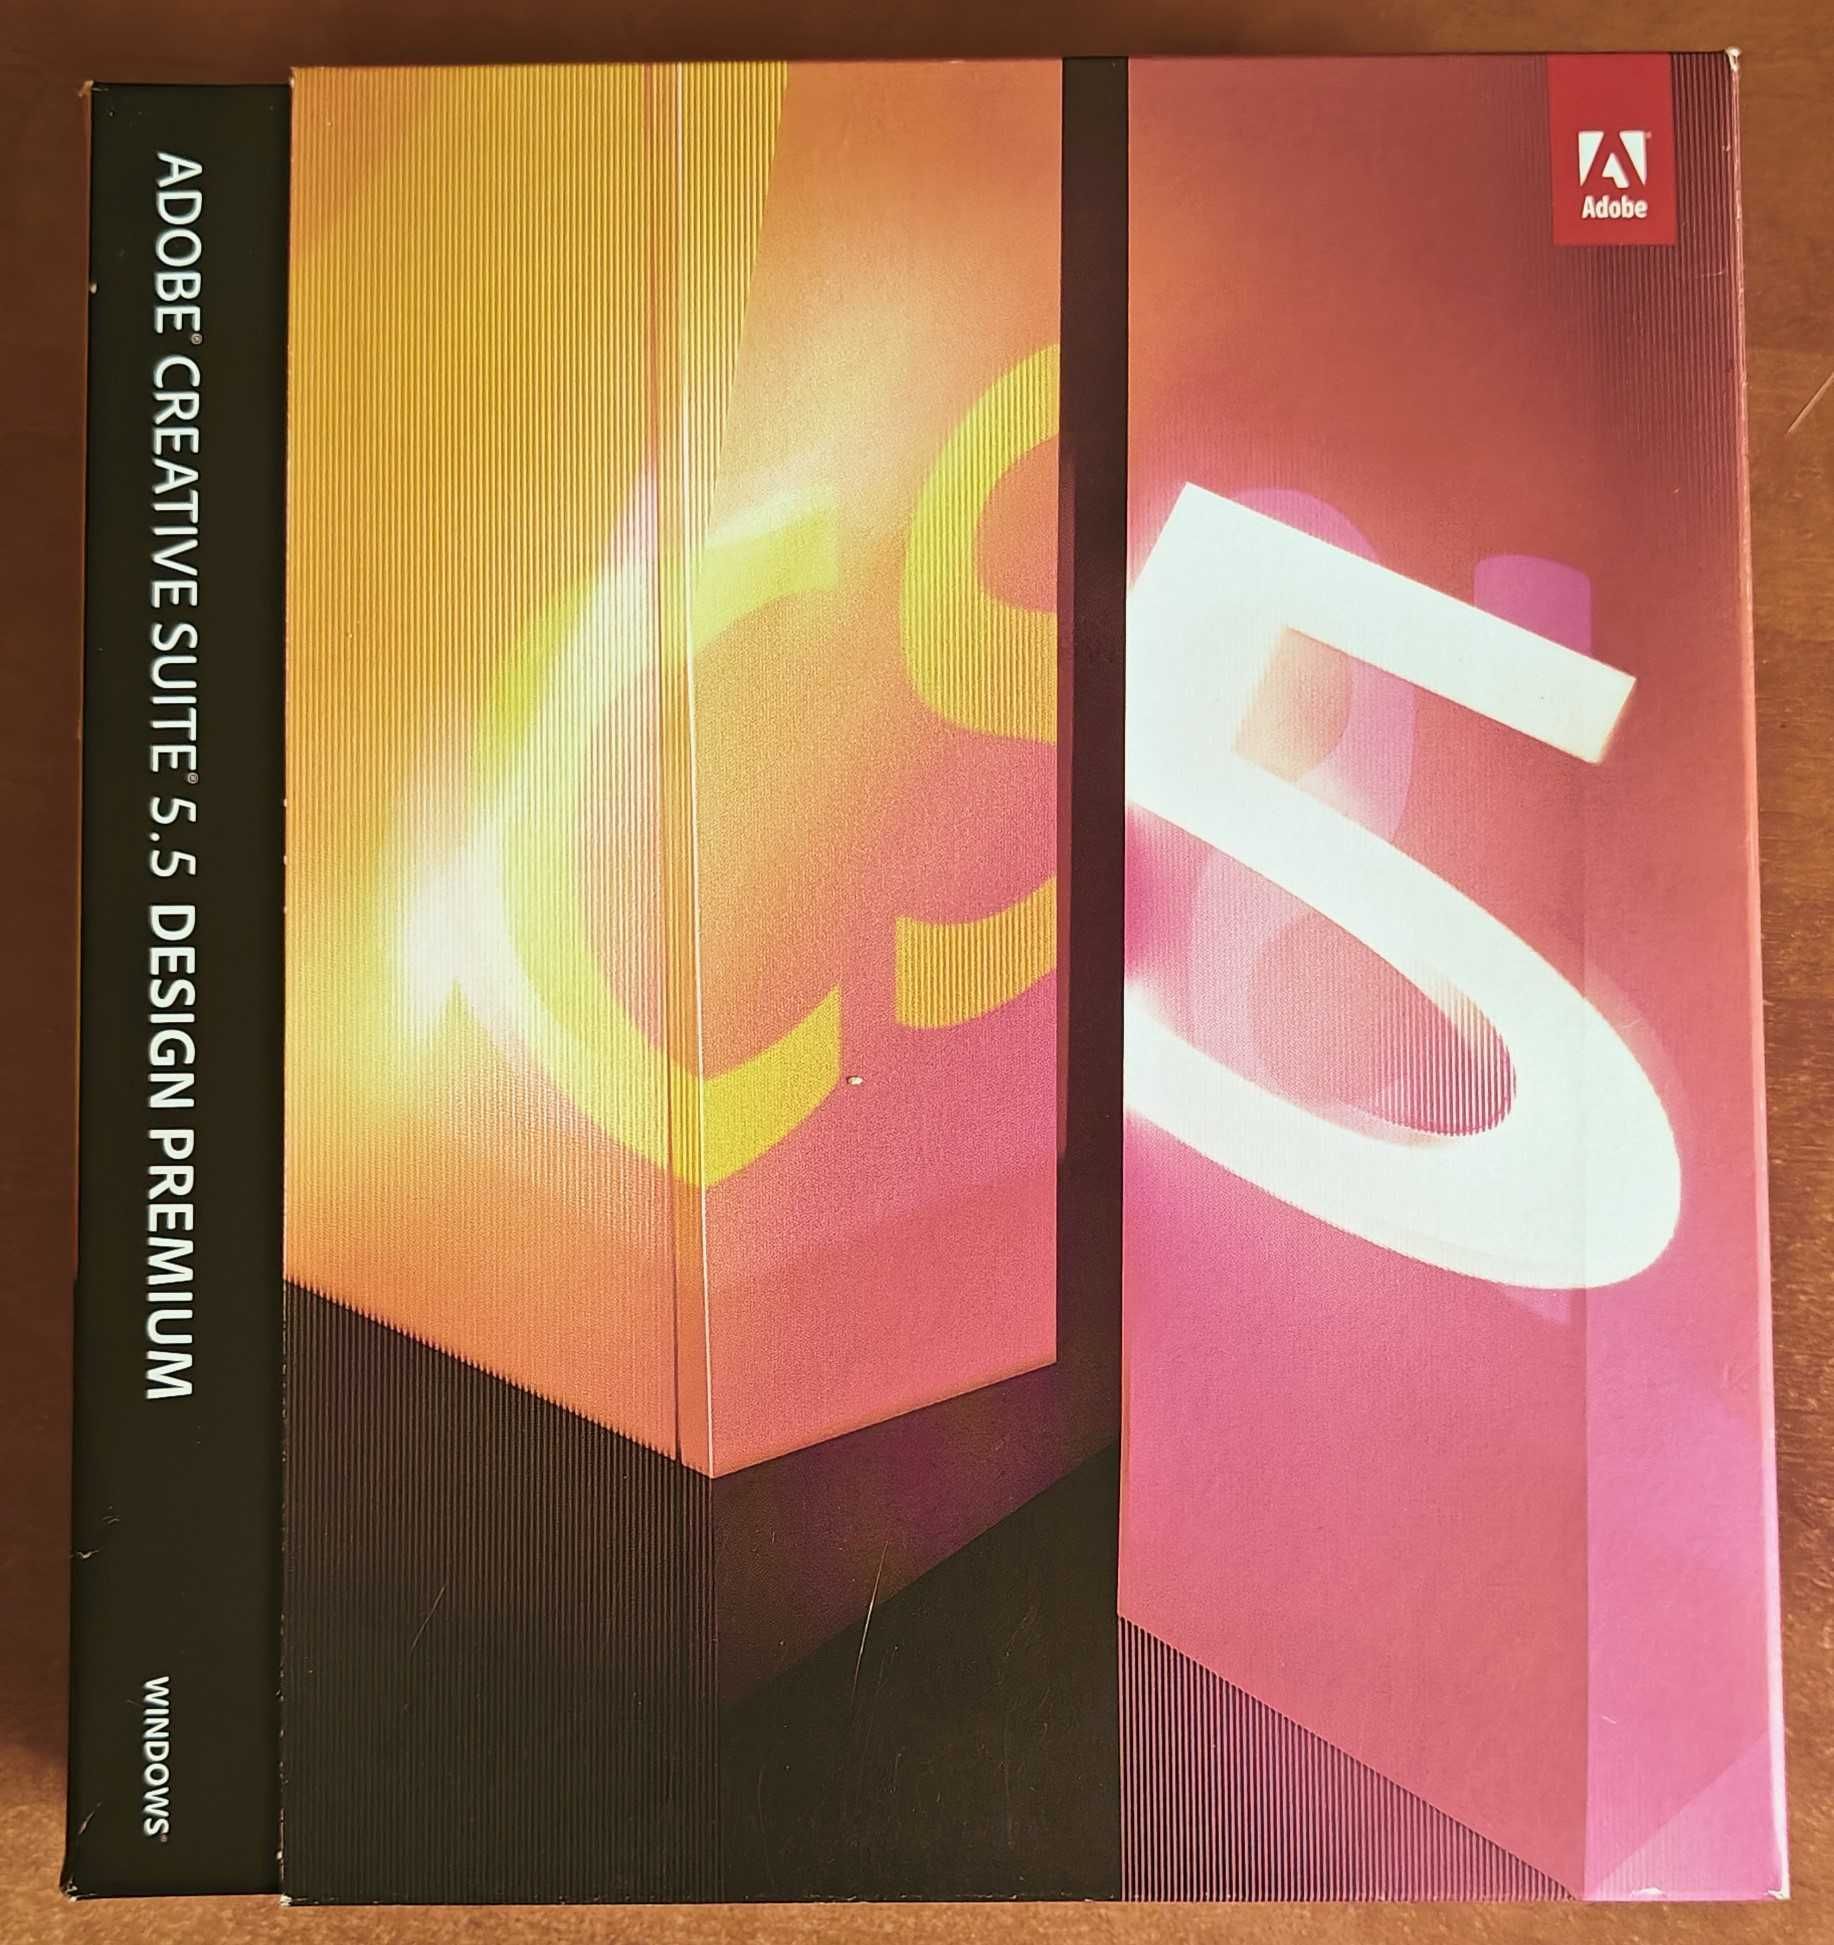 Adobe Creative Suite 5.5 ENG